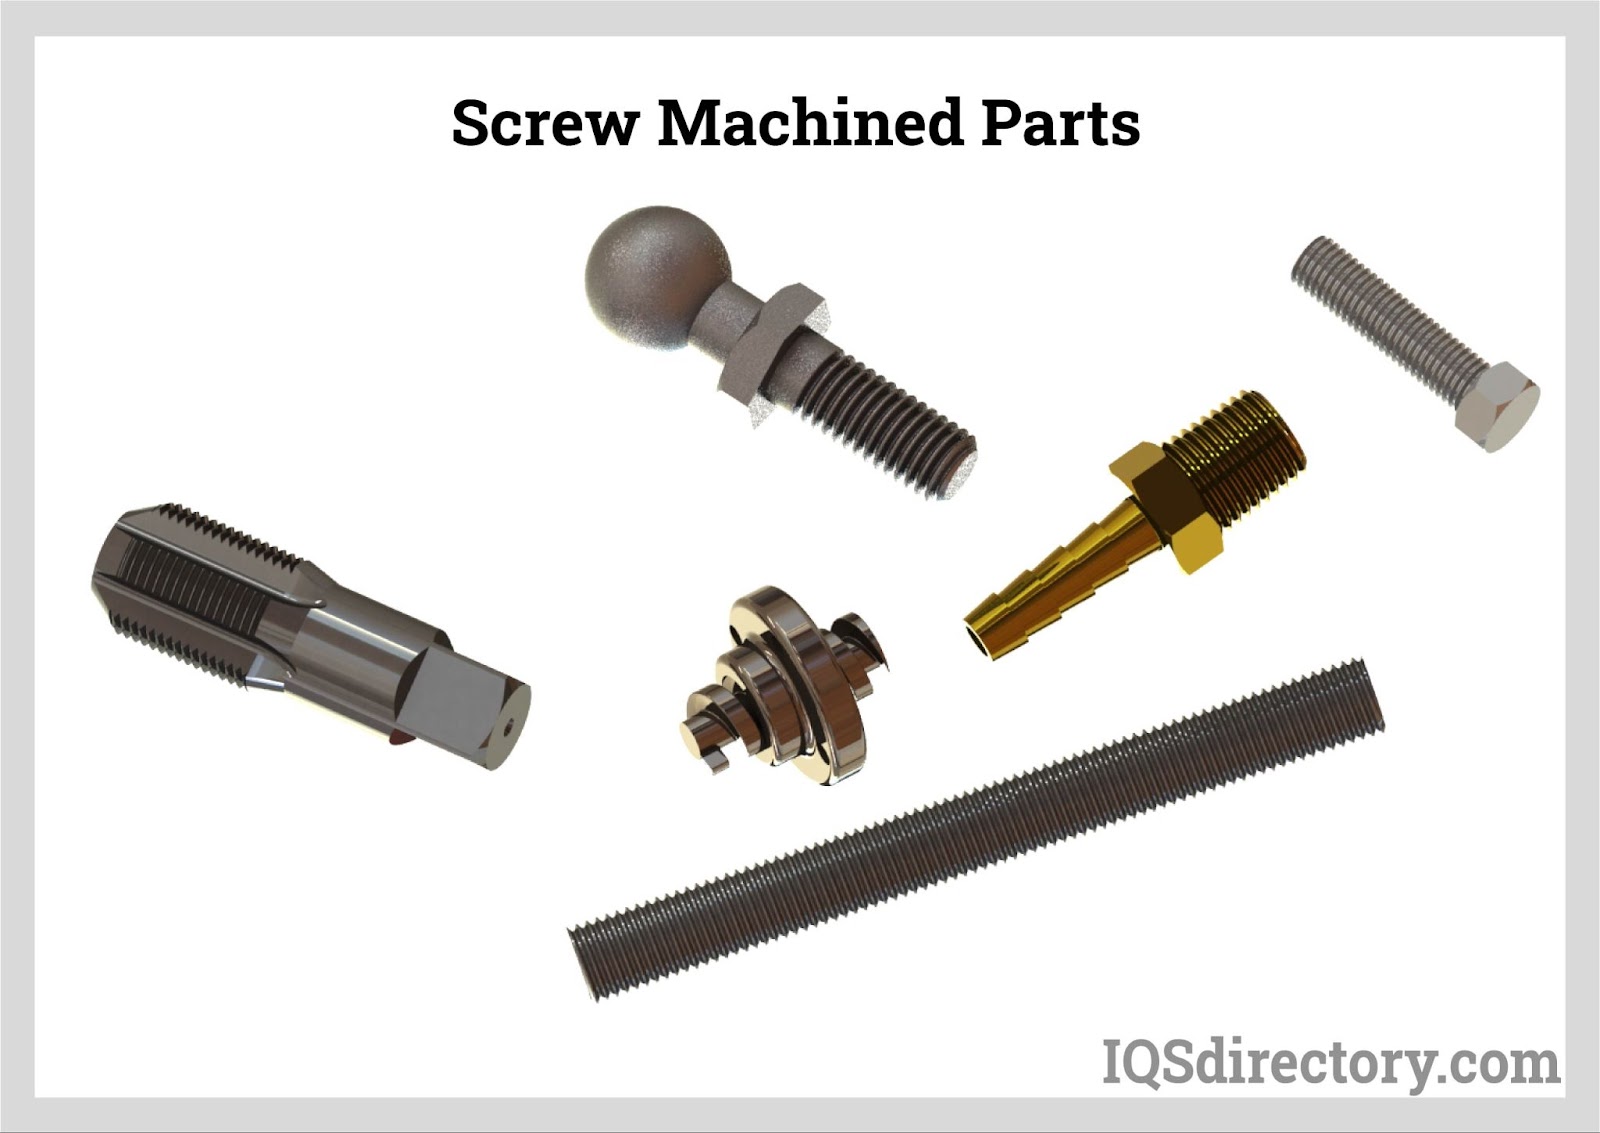 Screw Machined Parts